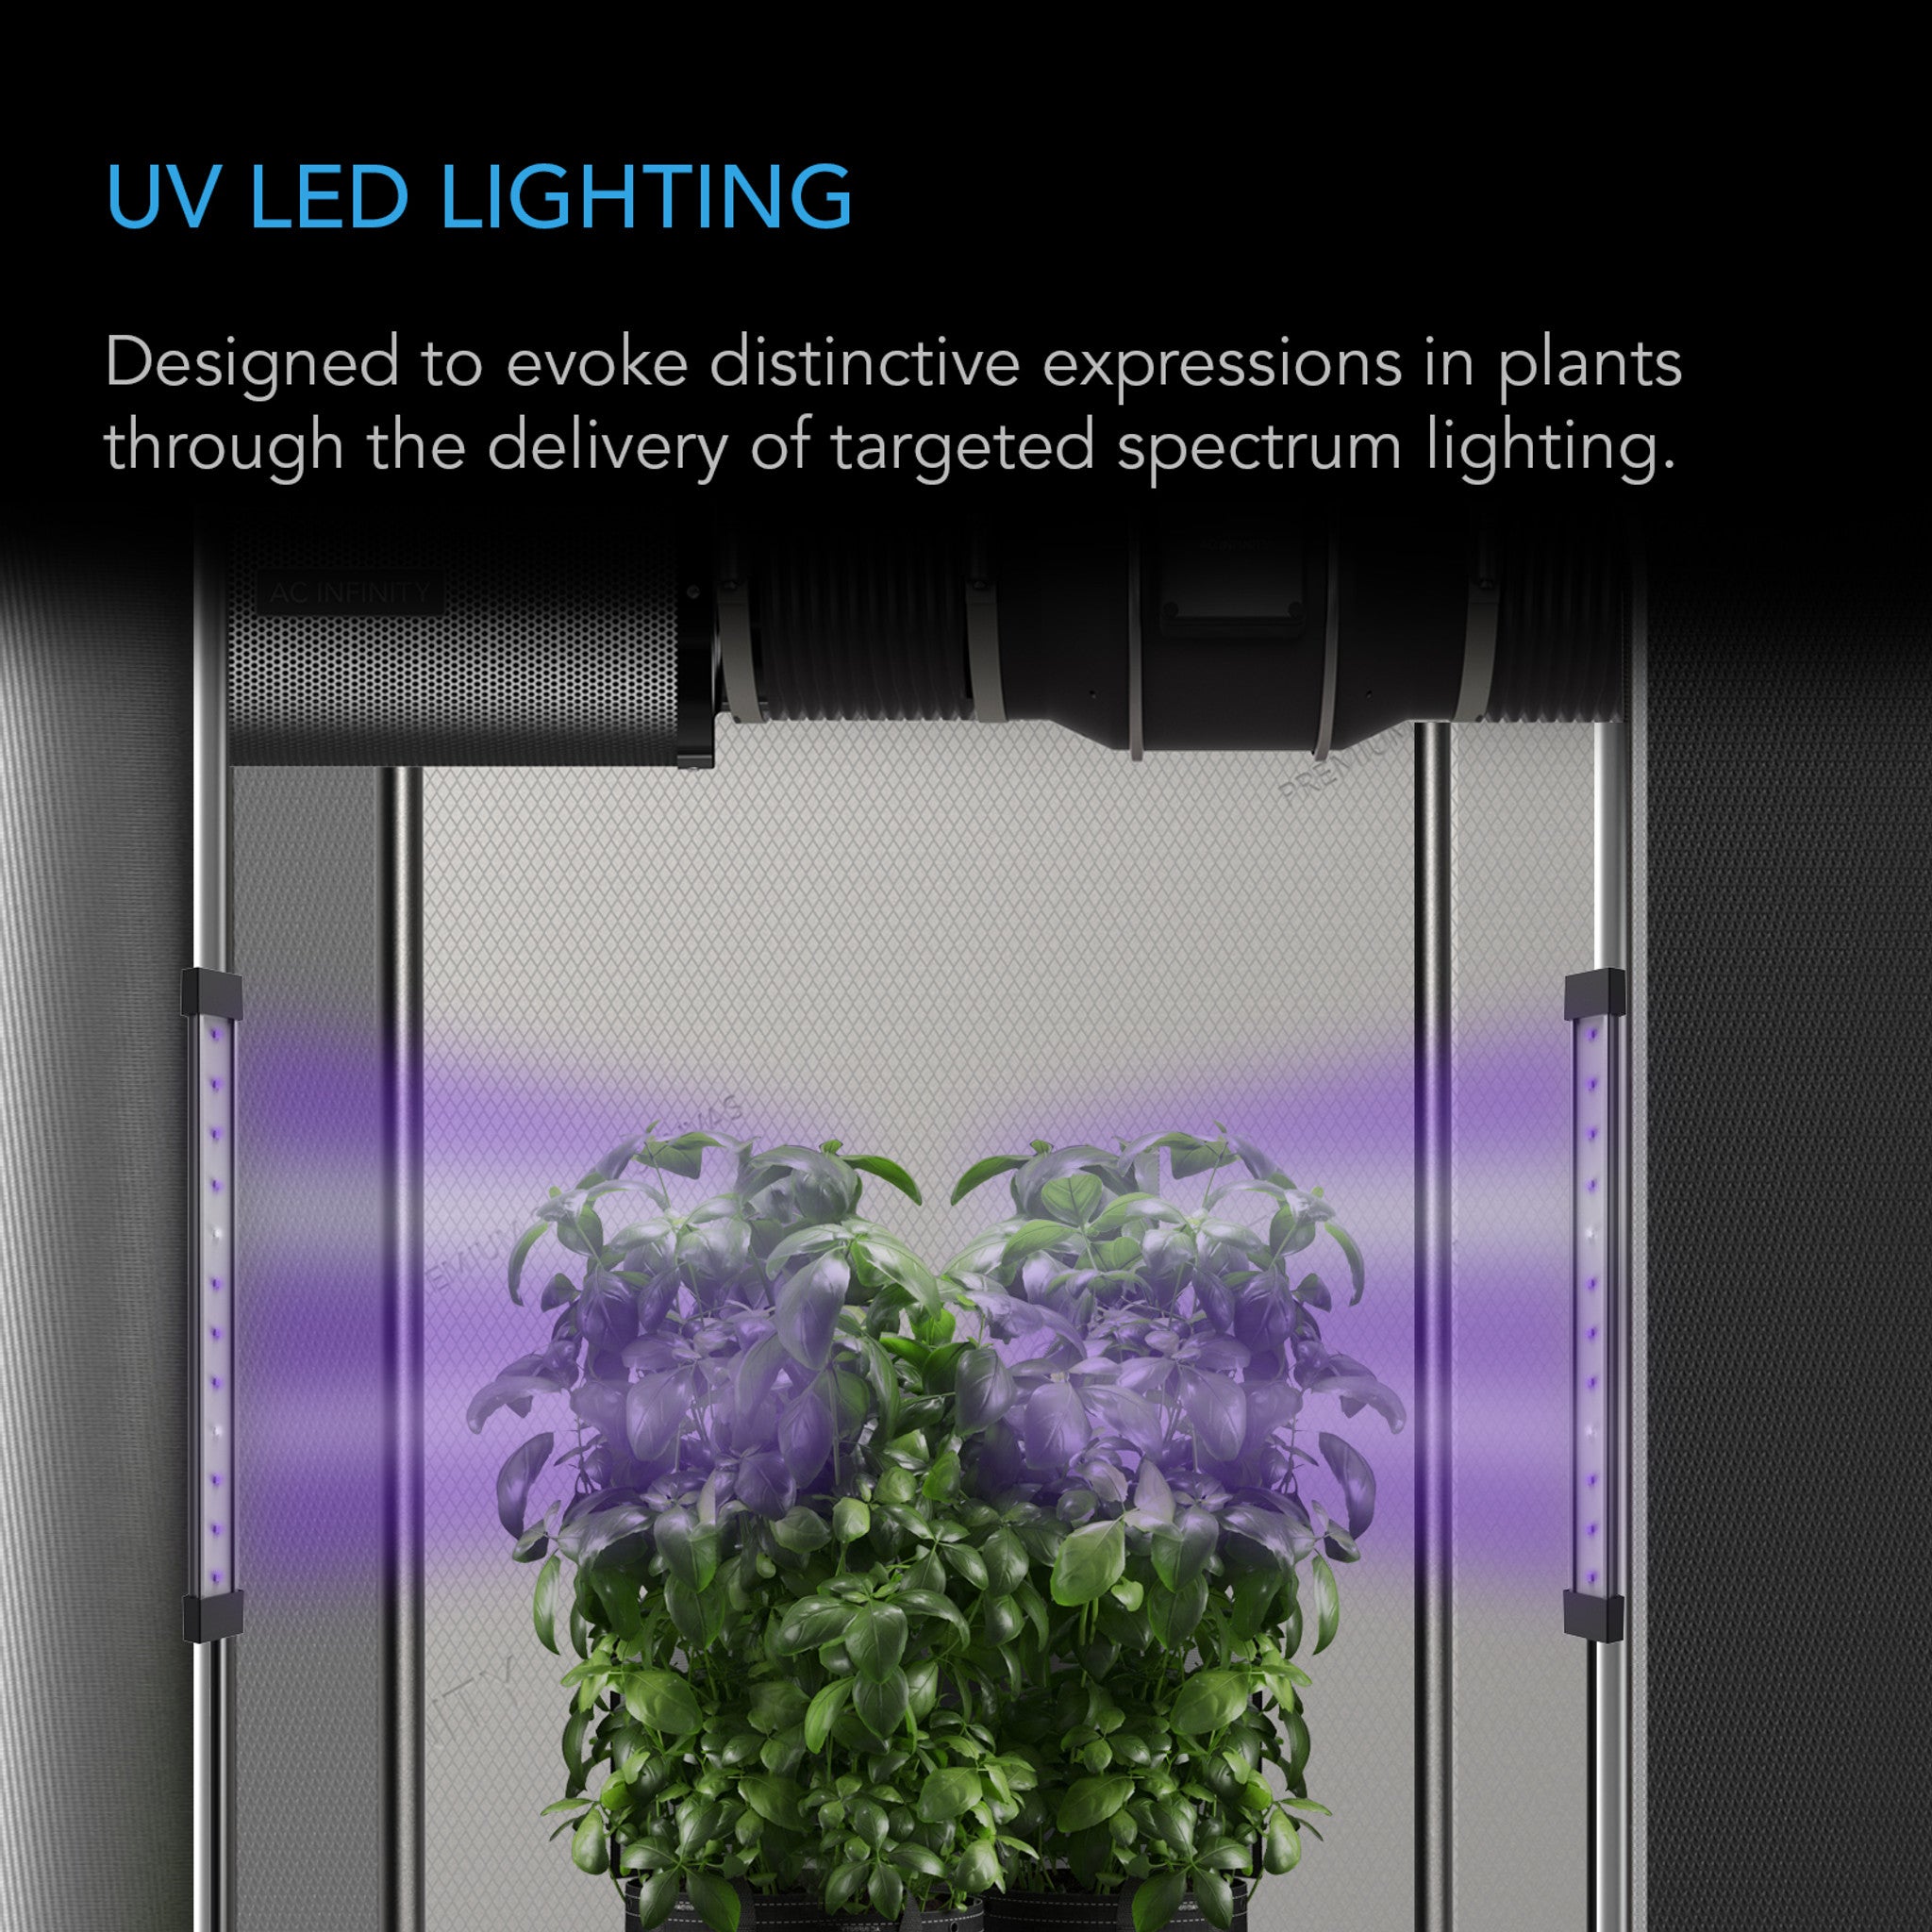 Product Secondary Image:IONBEAM U2, TARGETED SPECTRUM UV LED GROW LIGHT BARS, 2-BAR KIT, 11-INCH